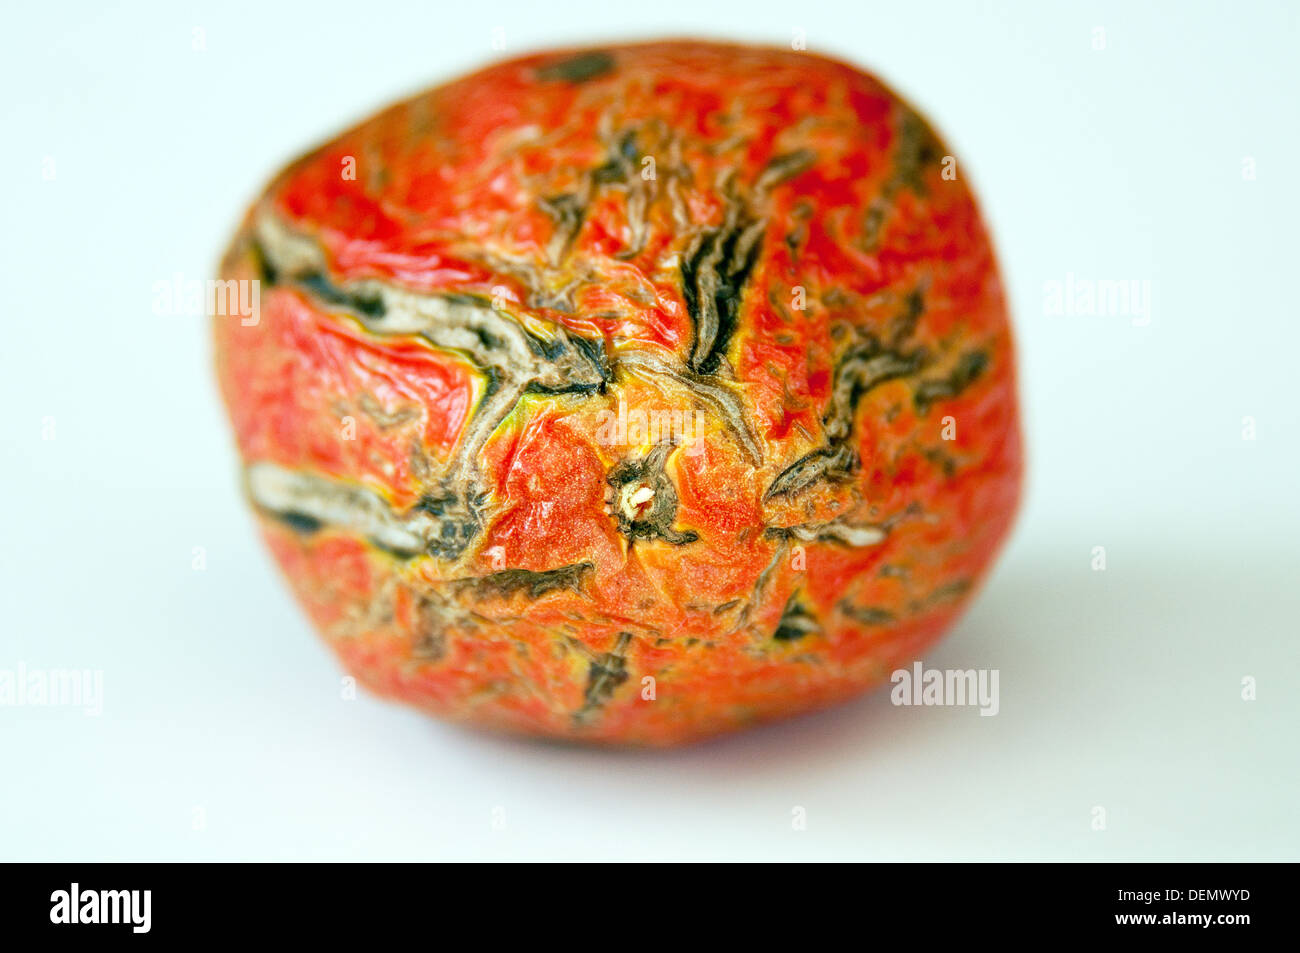 Bad tomato with scars on white Stock Photo